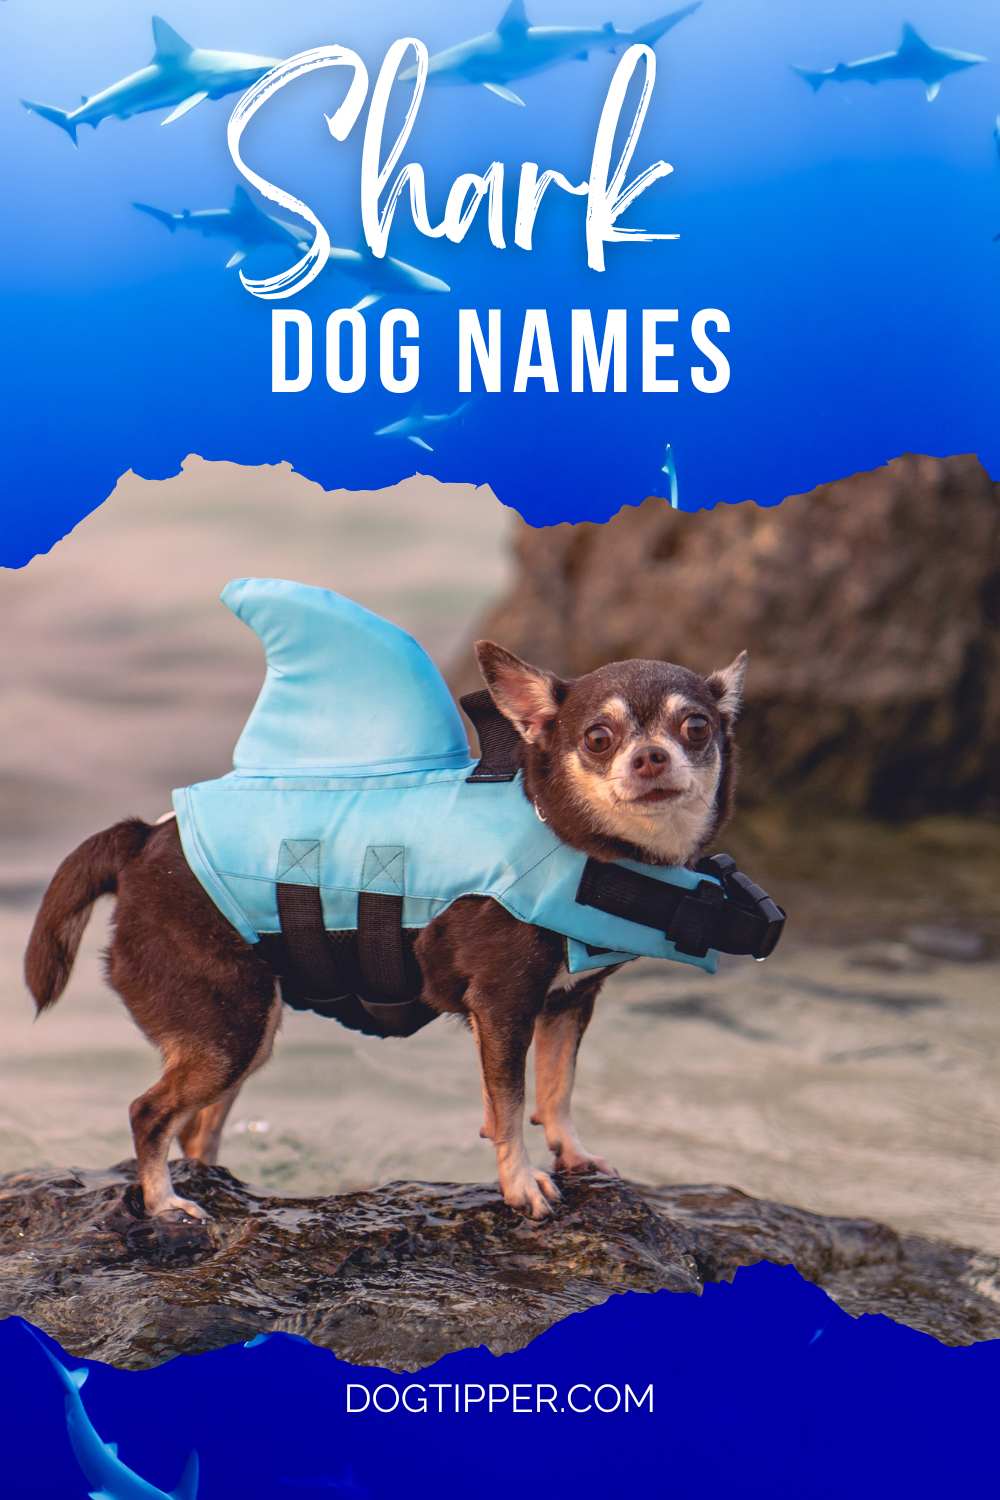 Shark Dog Names - famous sharks, sharks from movies, shark inspired names